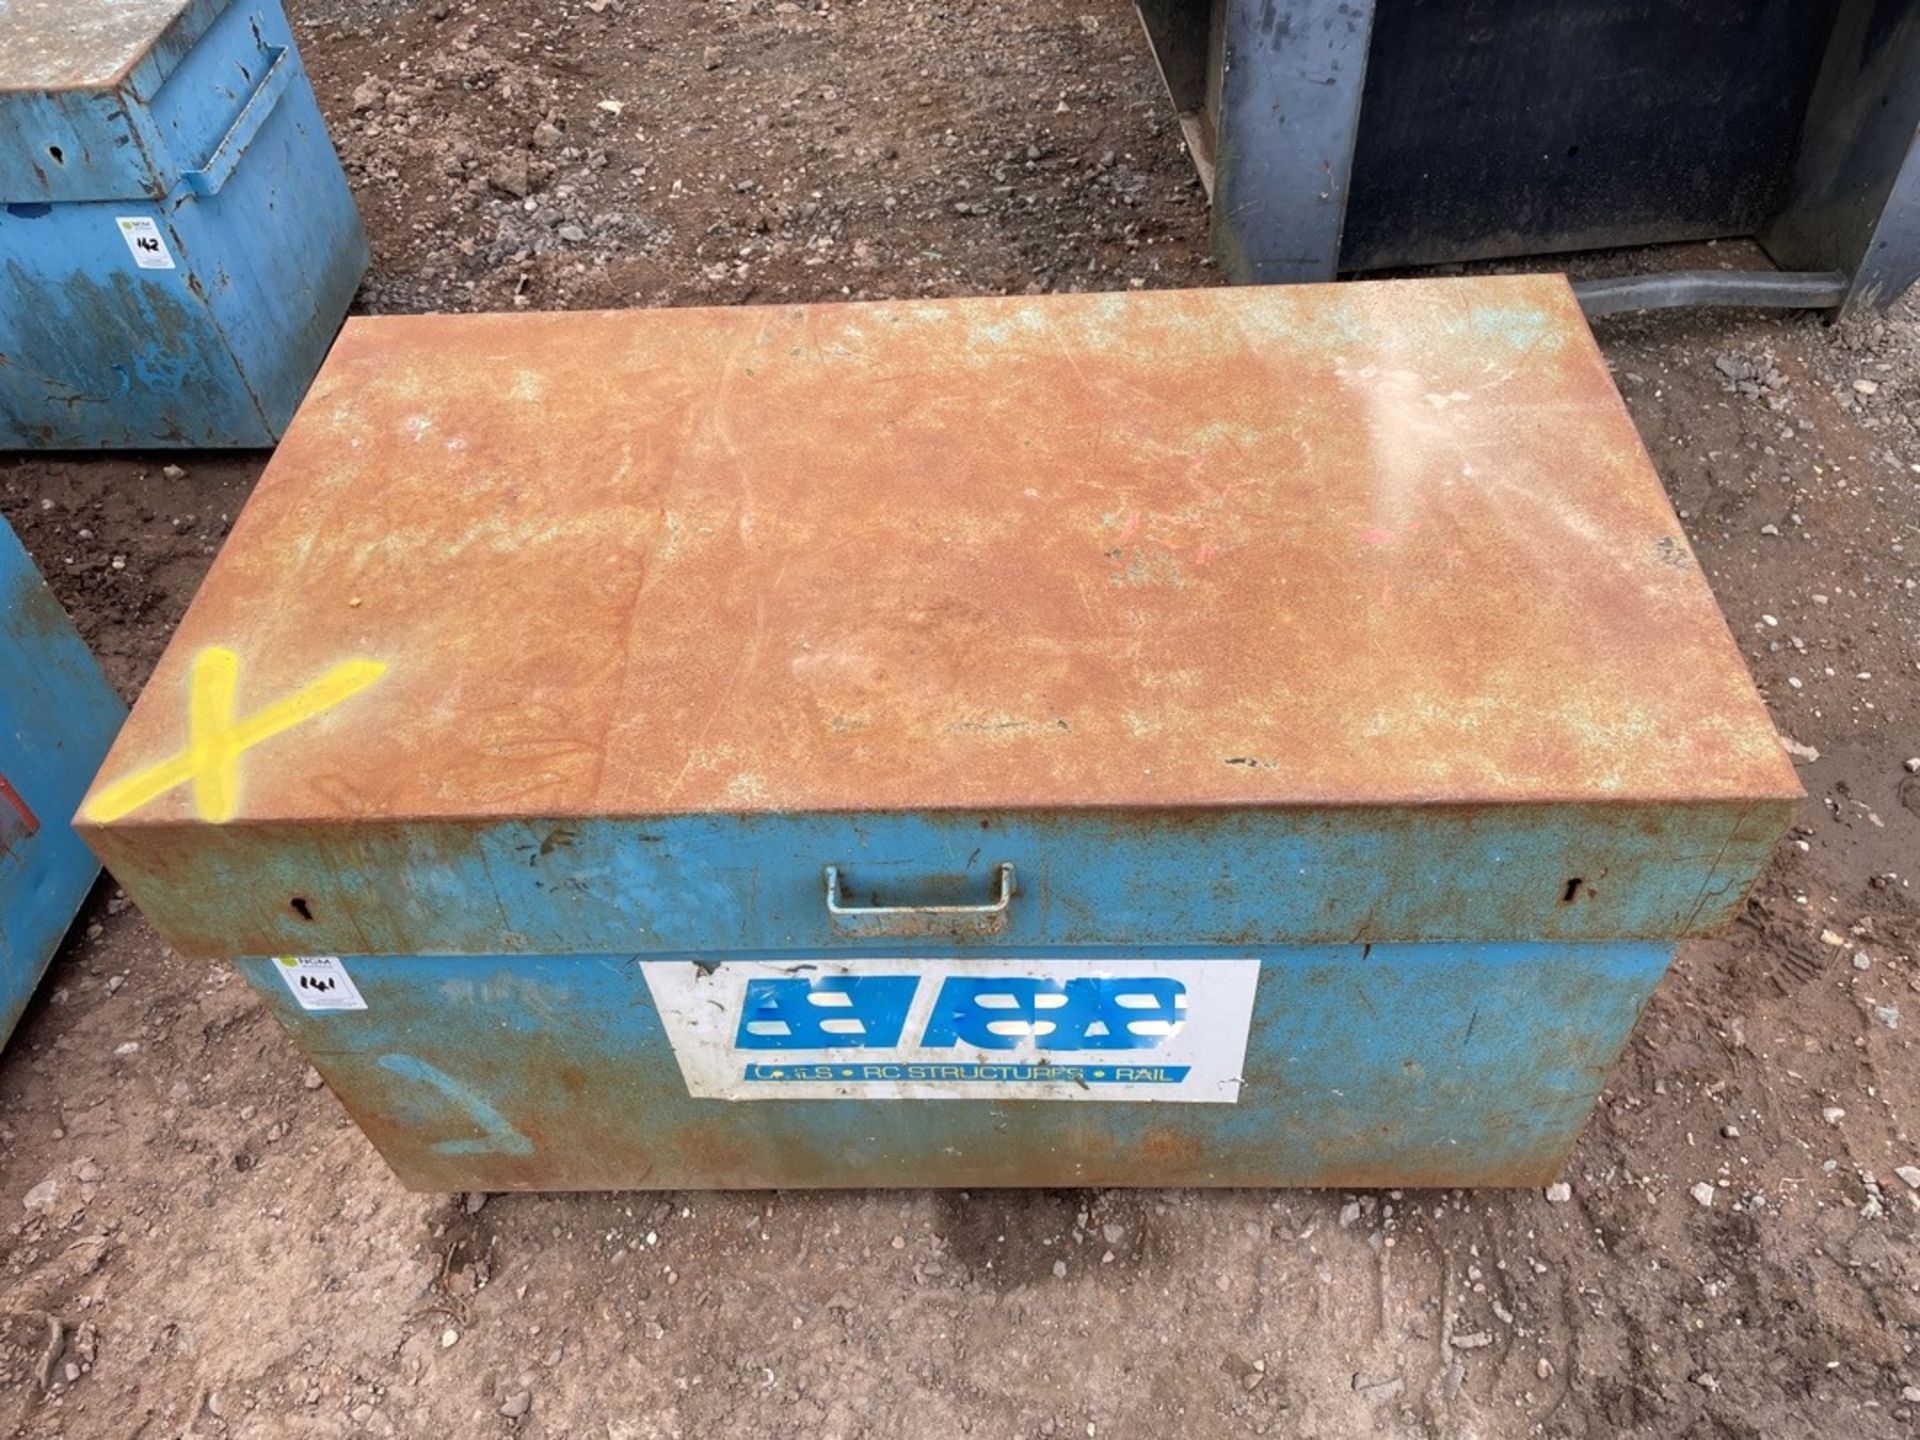 Steel Storage/Lock Box